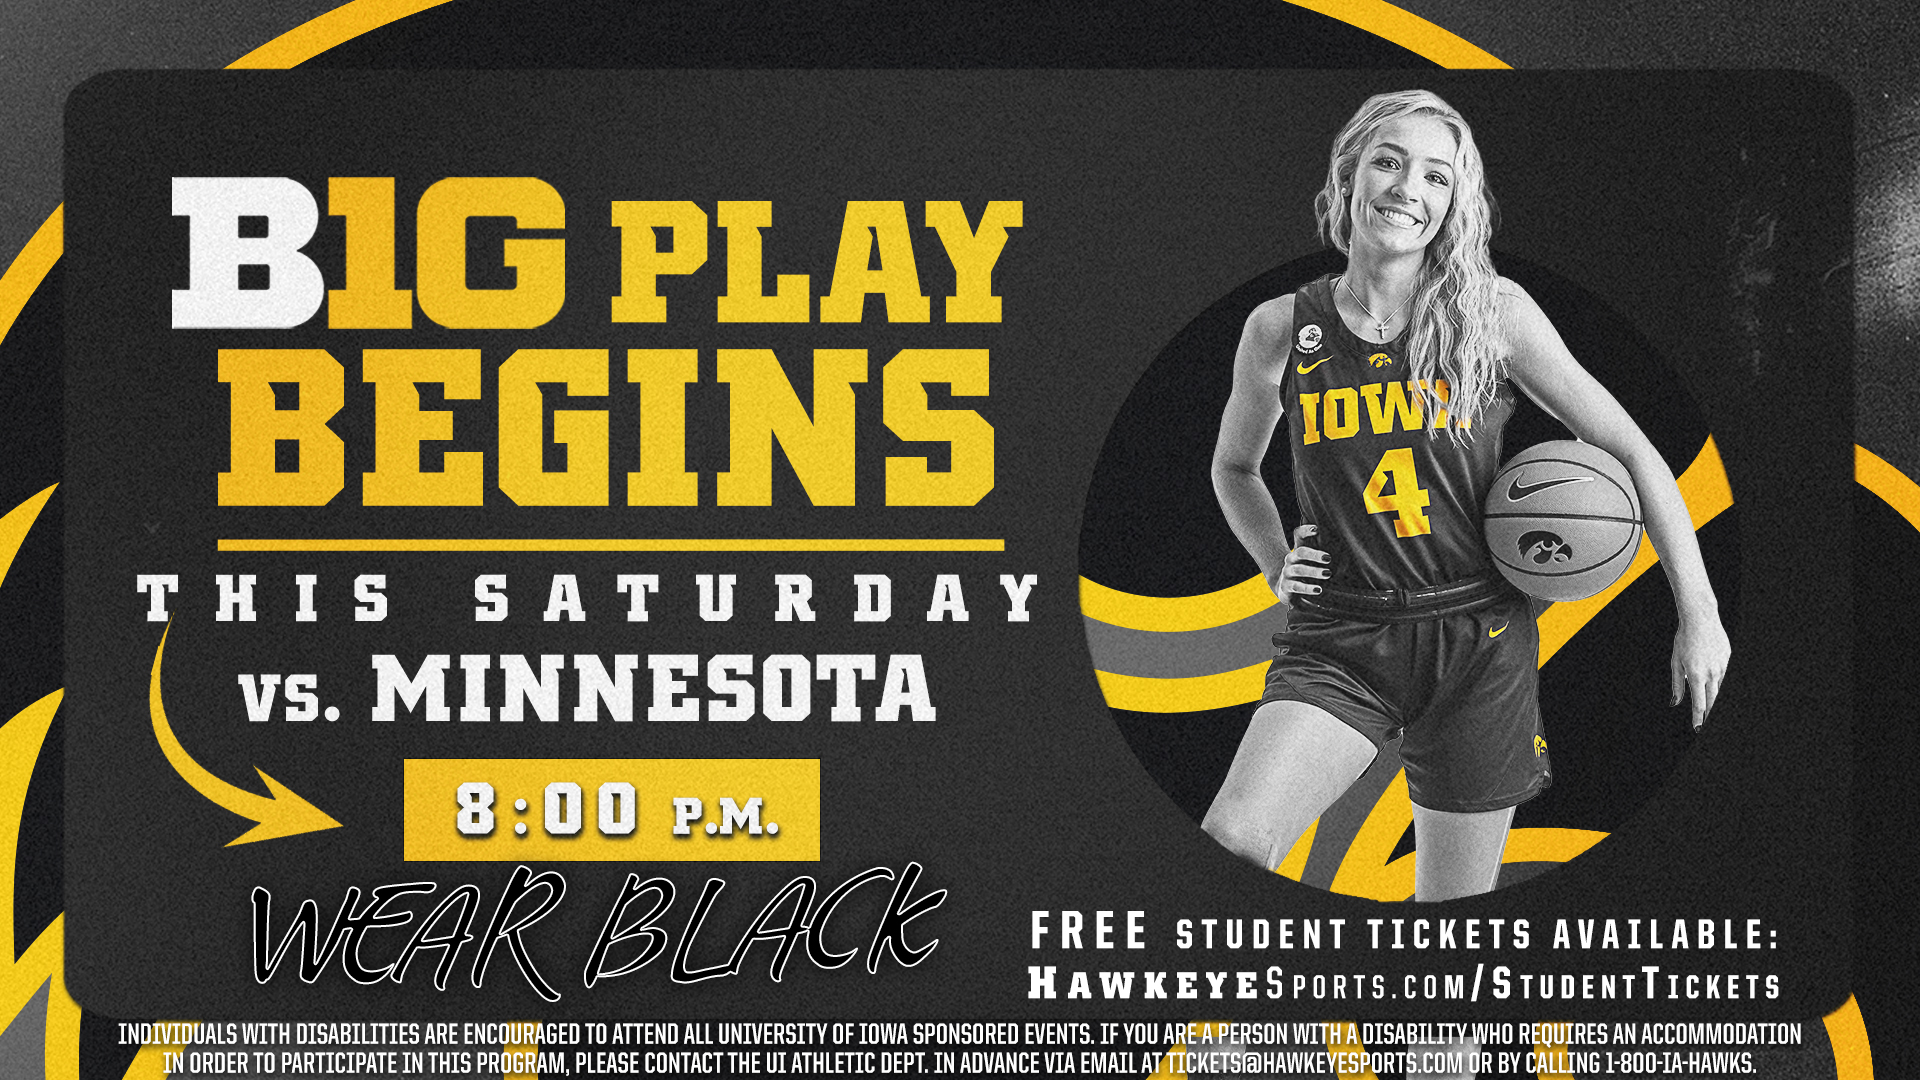 Iowa Women's Basketball vs. Minnesota, Saturday, Dec. 10 - 8:00 p.m. at Carver-Hawkeye Arena